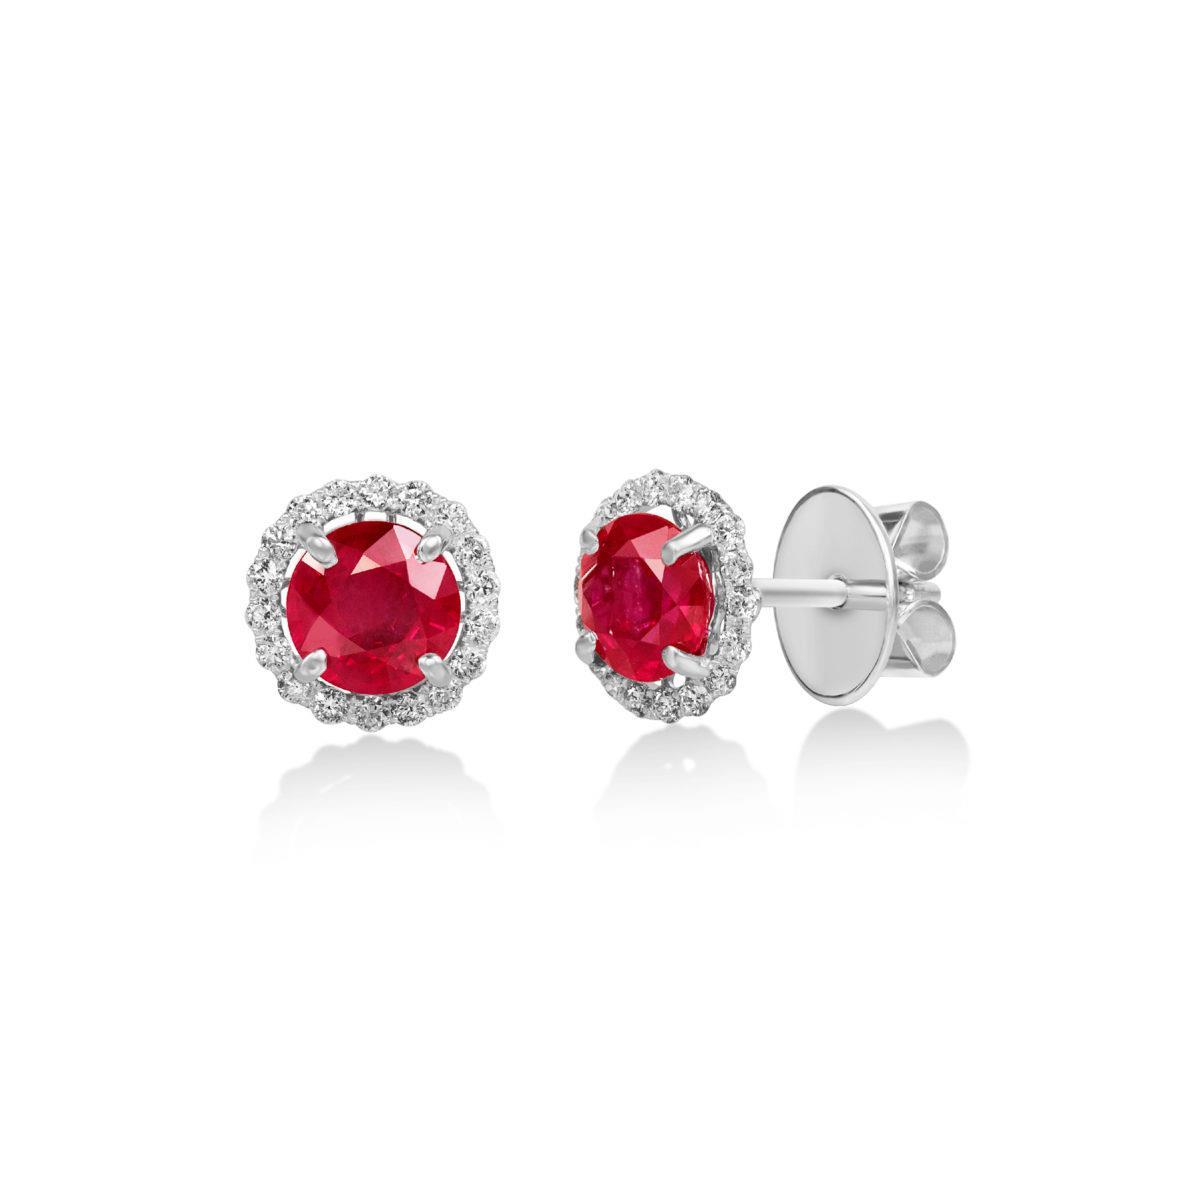 Brilliant Cut 4.36 Ct Ruby And Diamonds Studs Earrings White Gold 14K - Gemstone Earring-harrychadent.ca